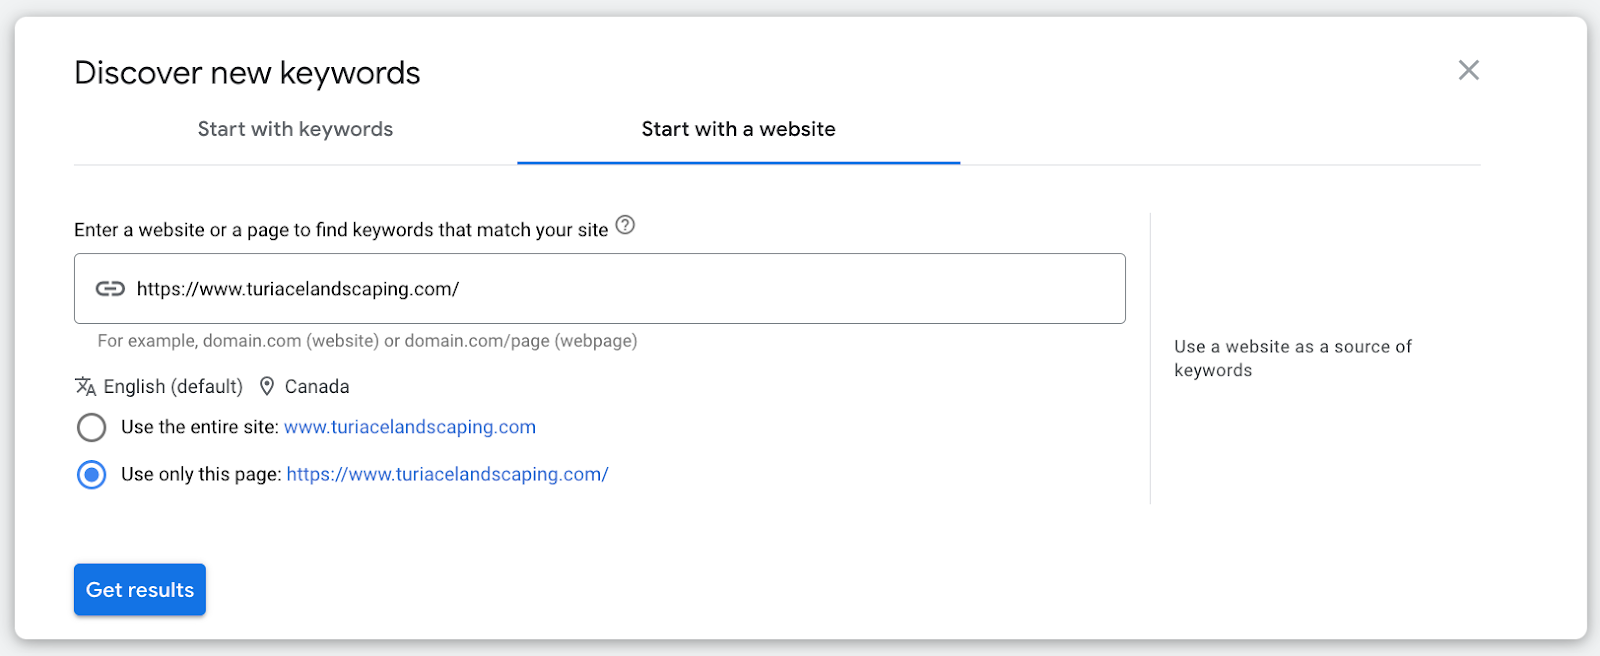 Google ads - "Start with a website"